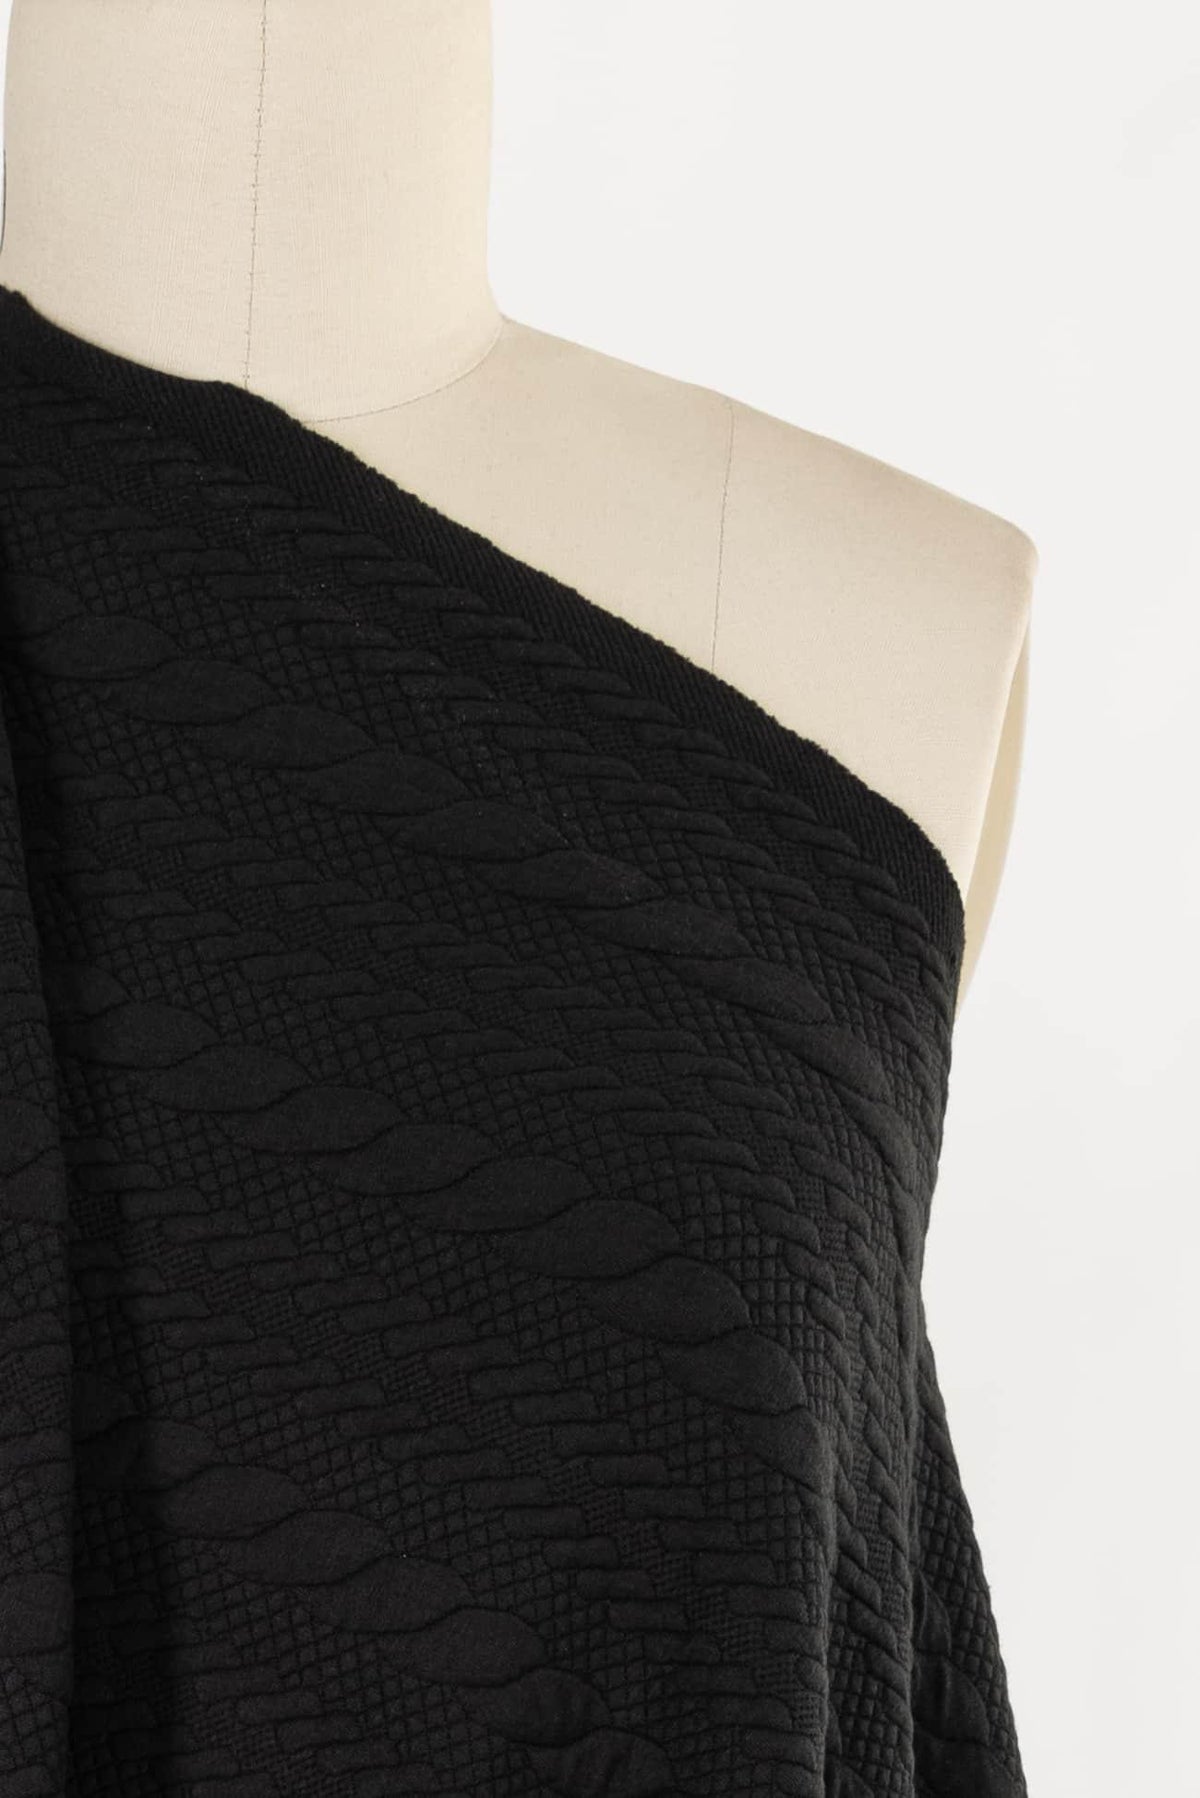 Black Cable Knit - Marcy Tilton Fabrics